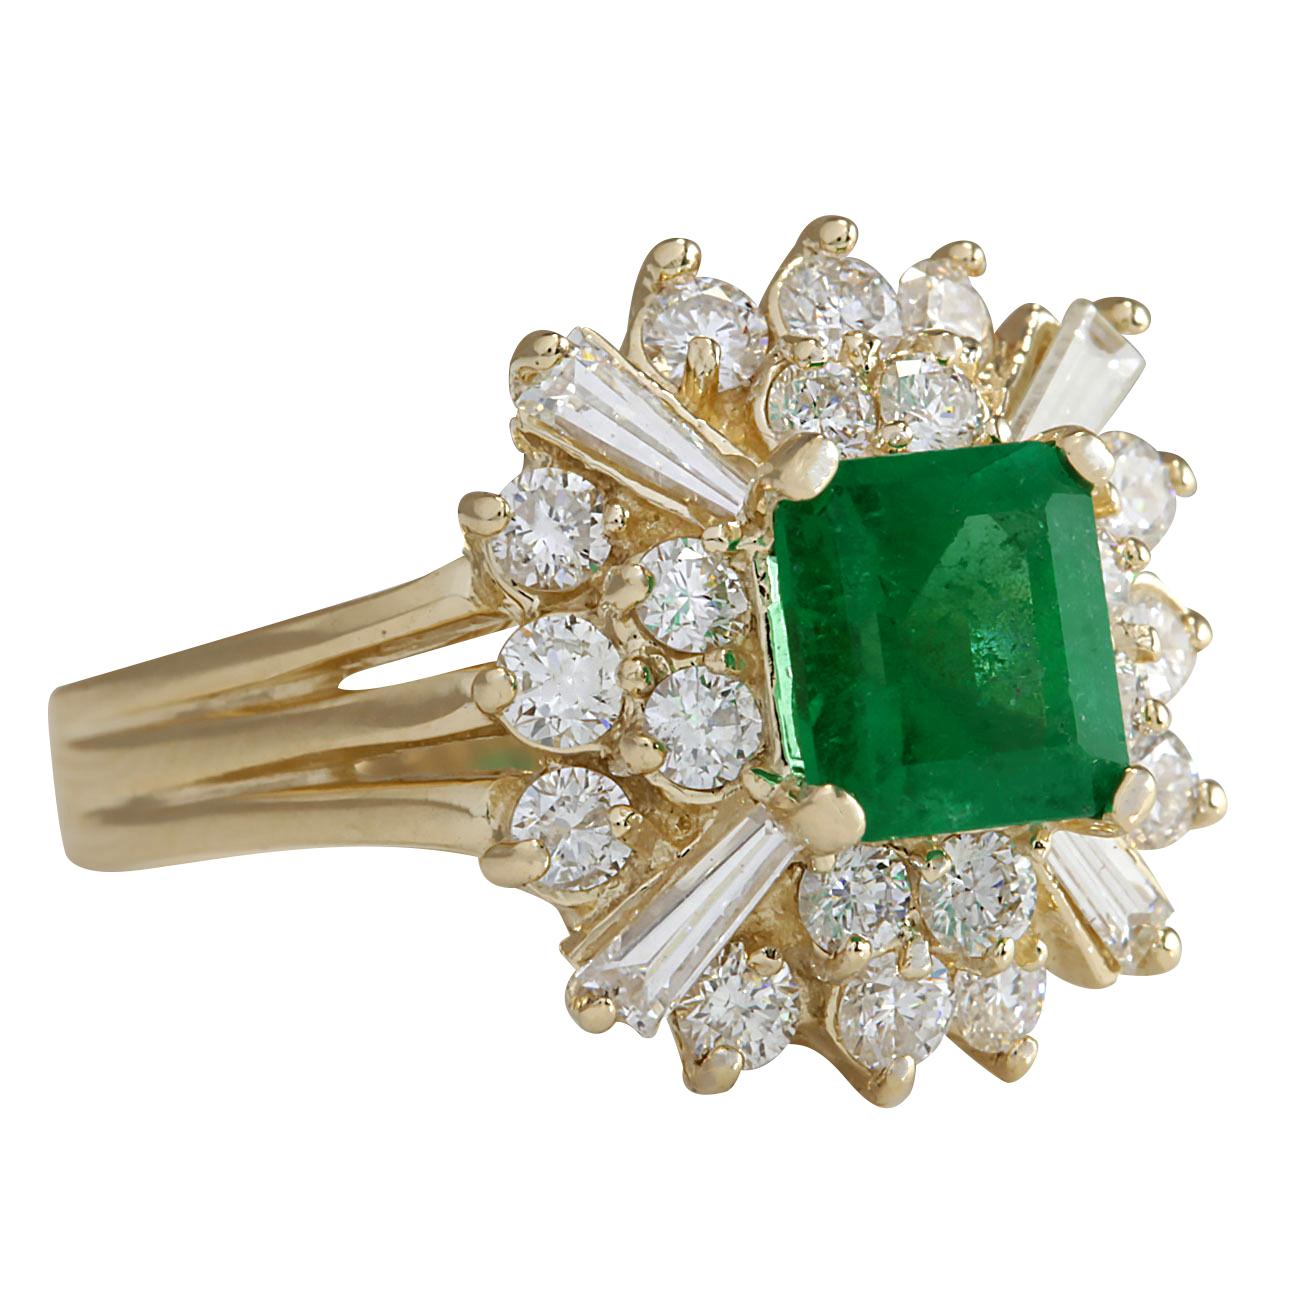 2.31 Carat Natural Emerald 14 Karat Yellow Gold Diamond Ring
Stamped: 14K Yellow Gold
Total Ring Weight: 5.6 Grams
Total Natural Emerald Weight is 1.16 Carat (Measures: 6.50x6.50 mm)
Color: Green
Total Natural Diamond Weight is 1.15 Carat
Color: